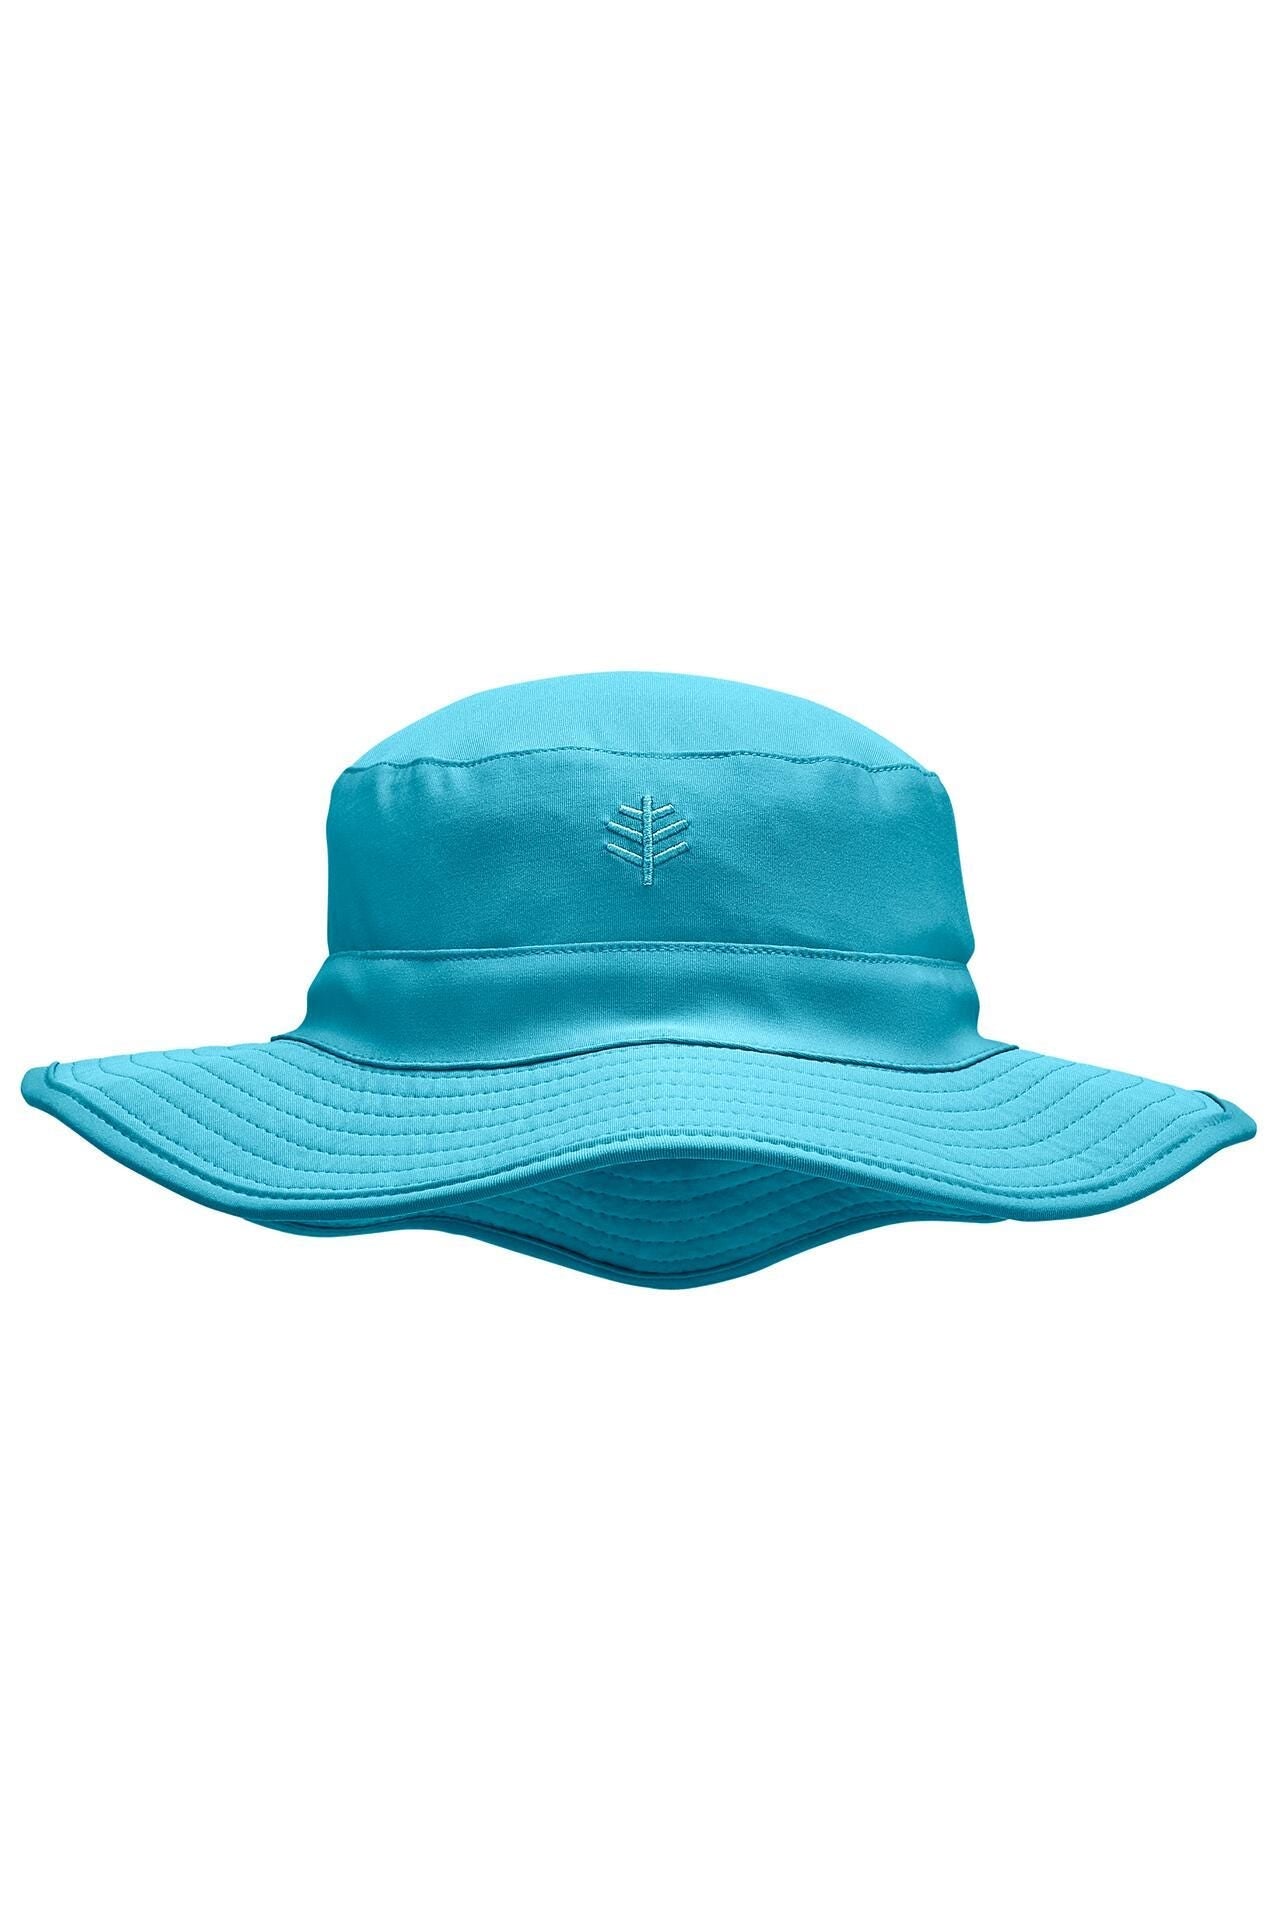 Coolibar Kid's Surfs Up Bucket Hat UPF 50+, Aruba Blue / S/M